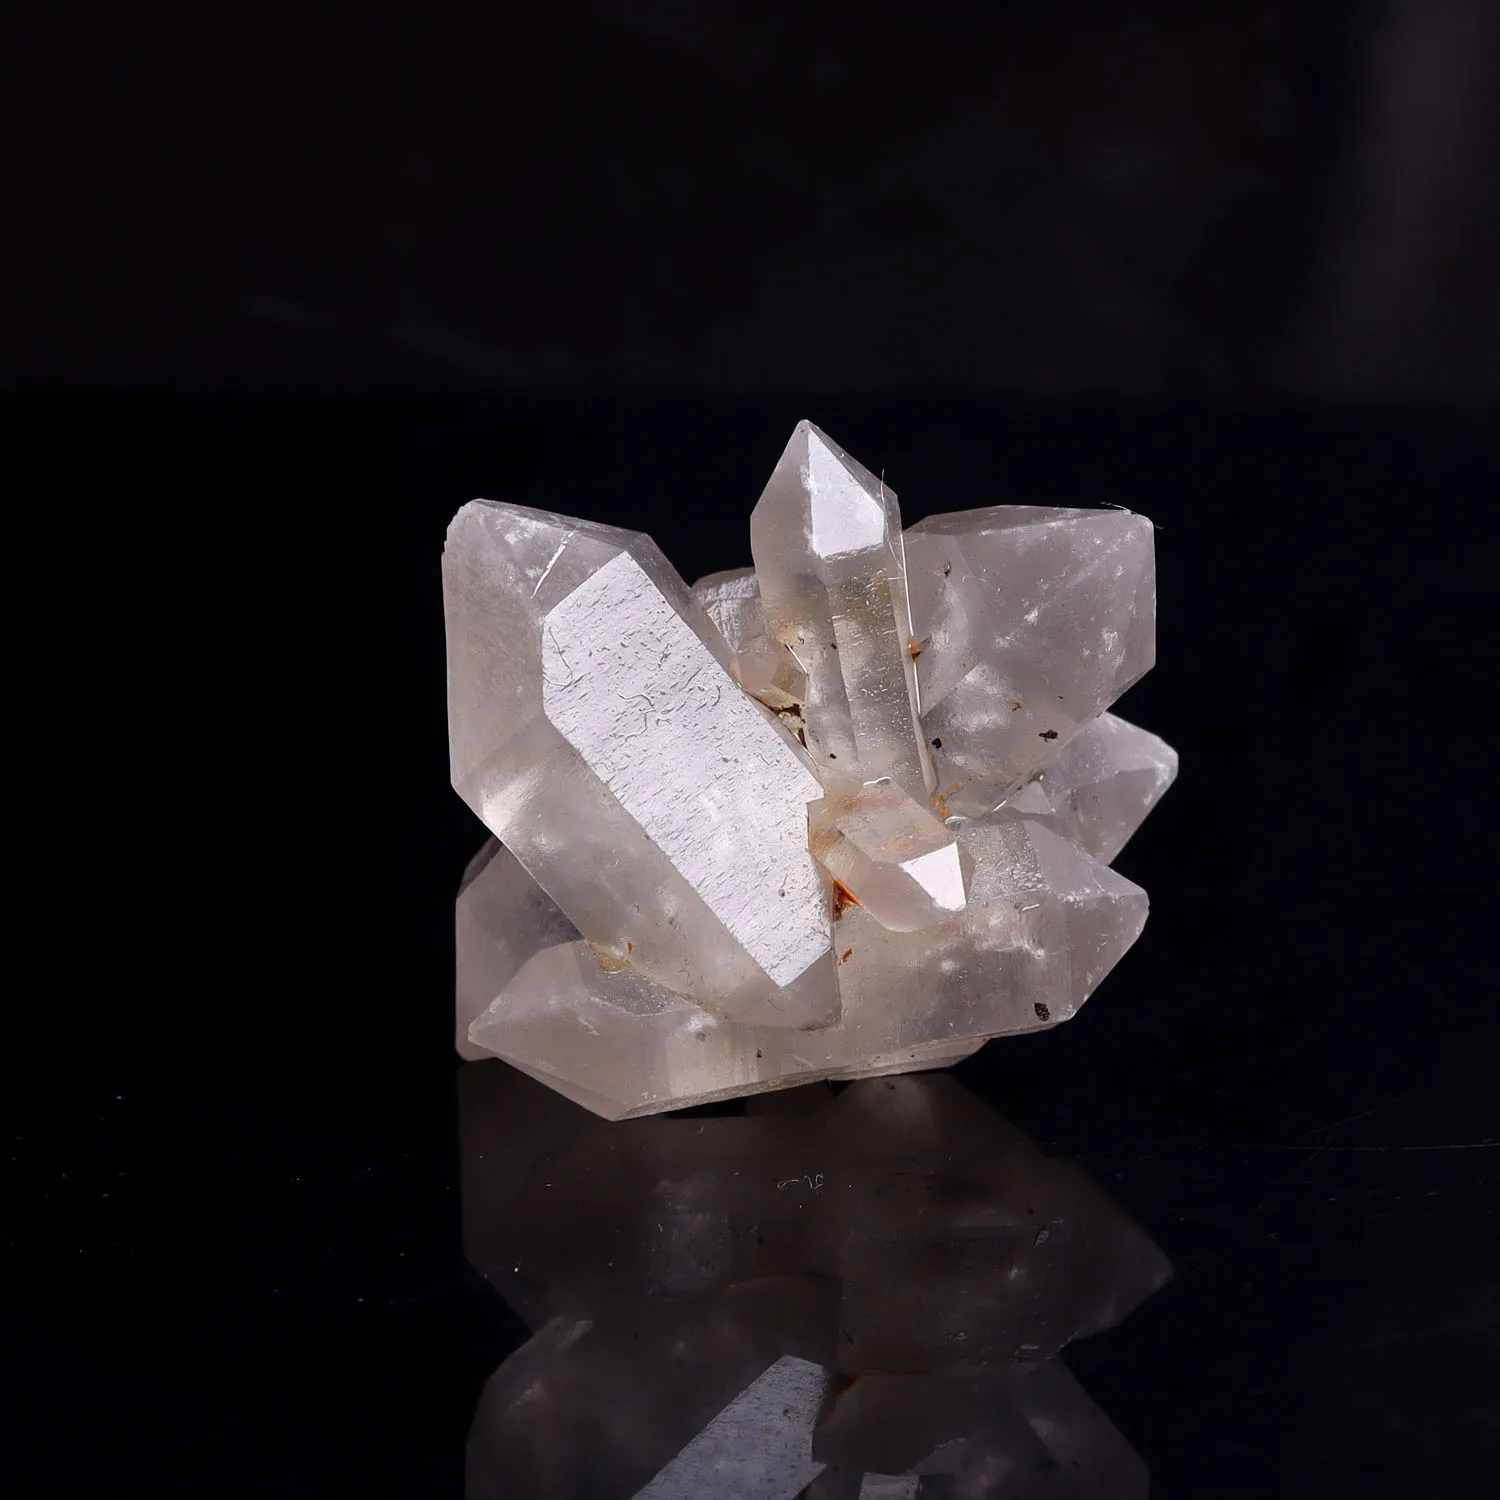 

1PC High Quality Natural Backbone Crystals Skeleton Quartz Healing Rough Gemstone Minerals Specimen Collecting Gift Decor